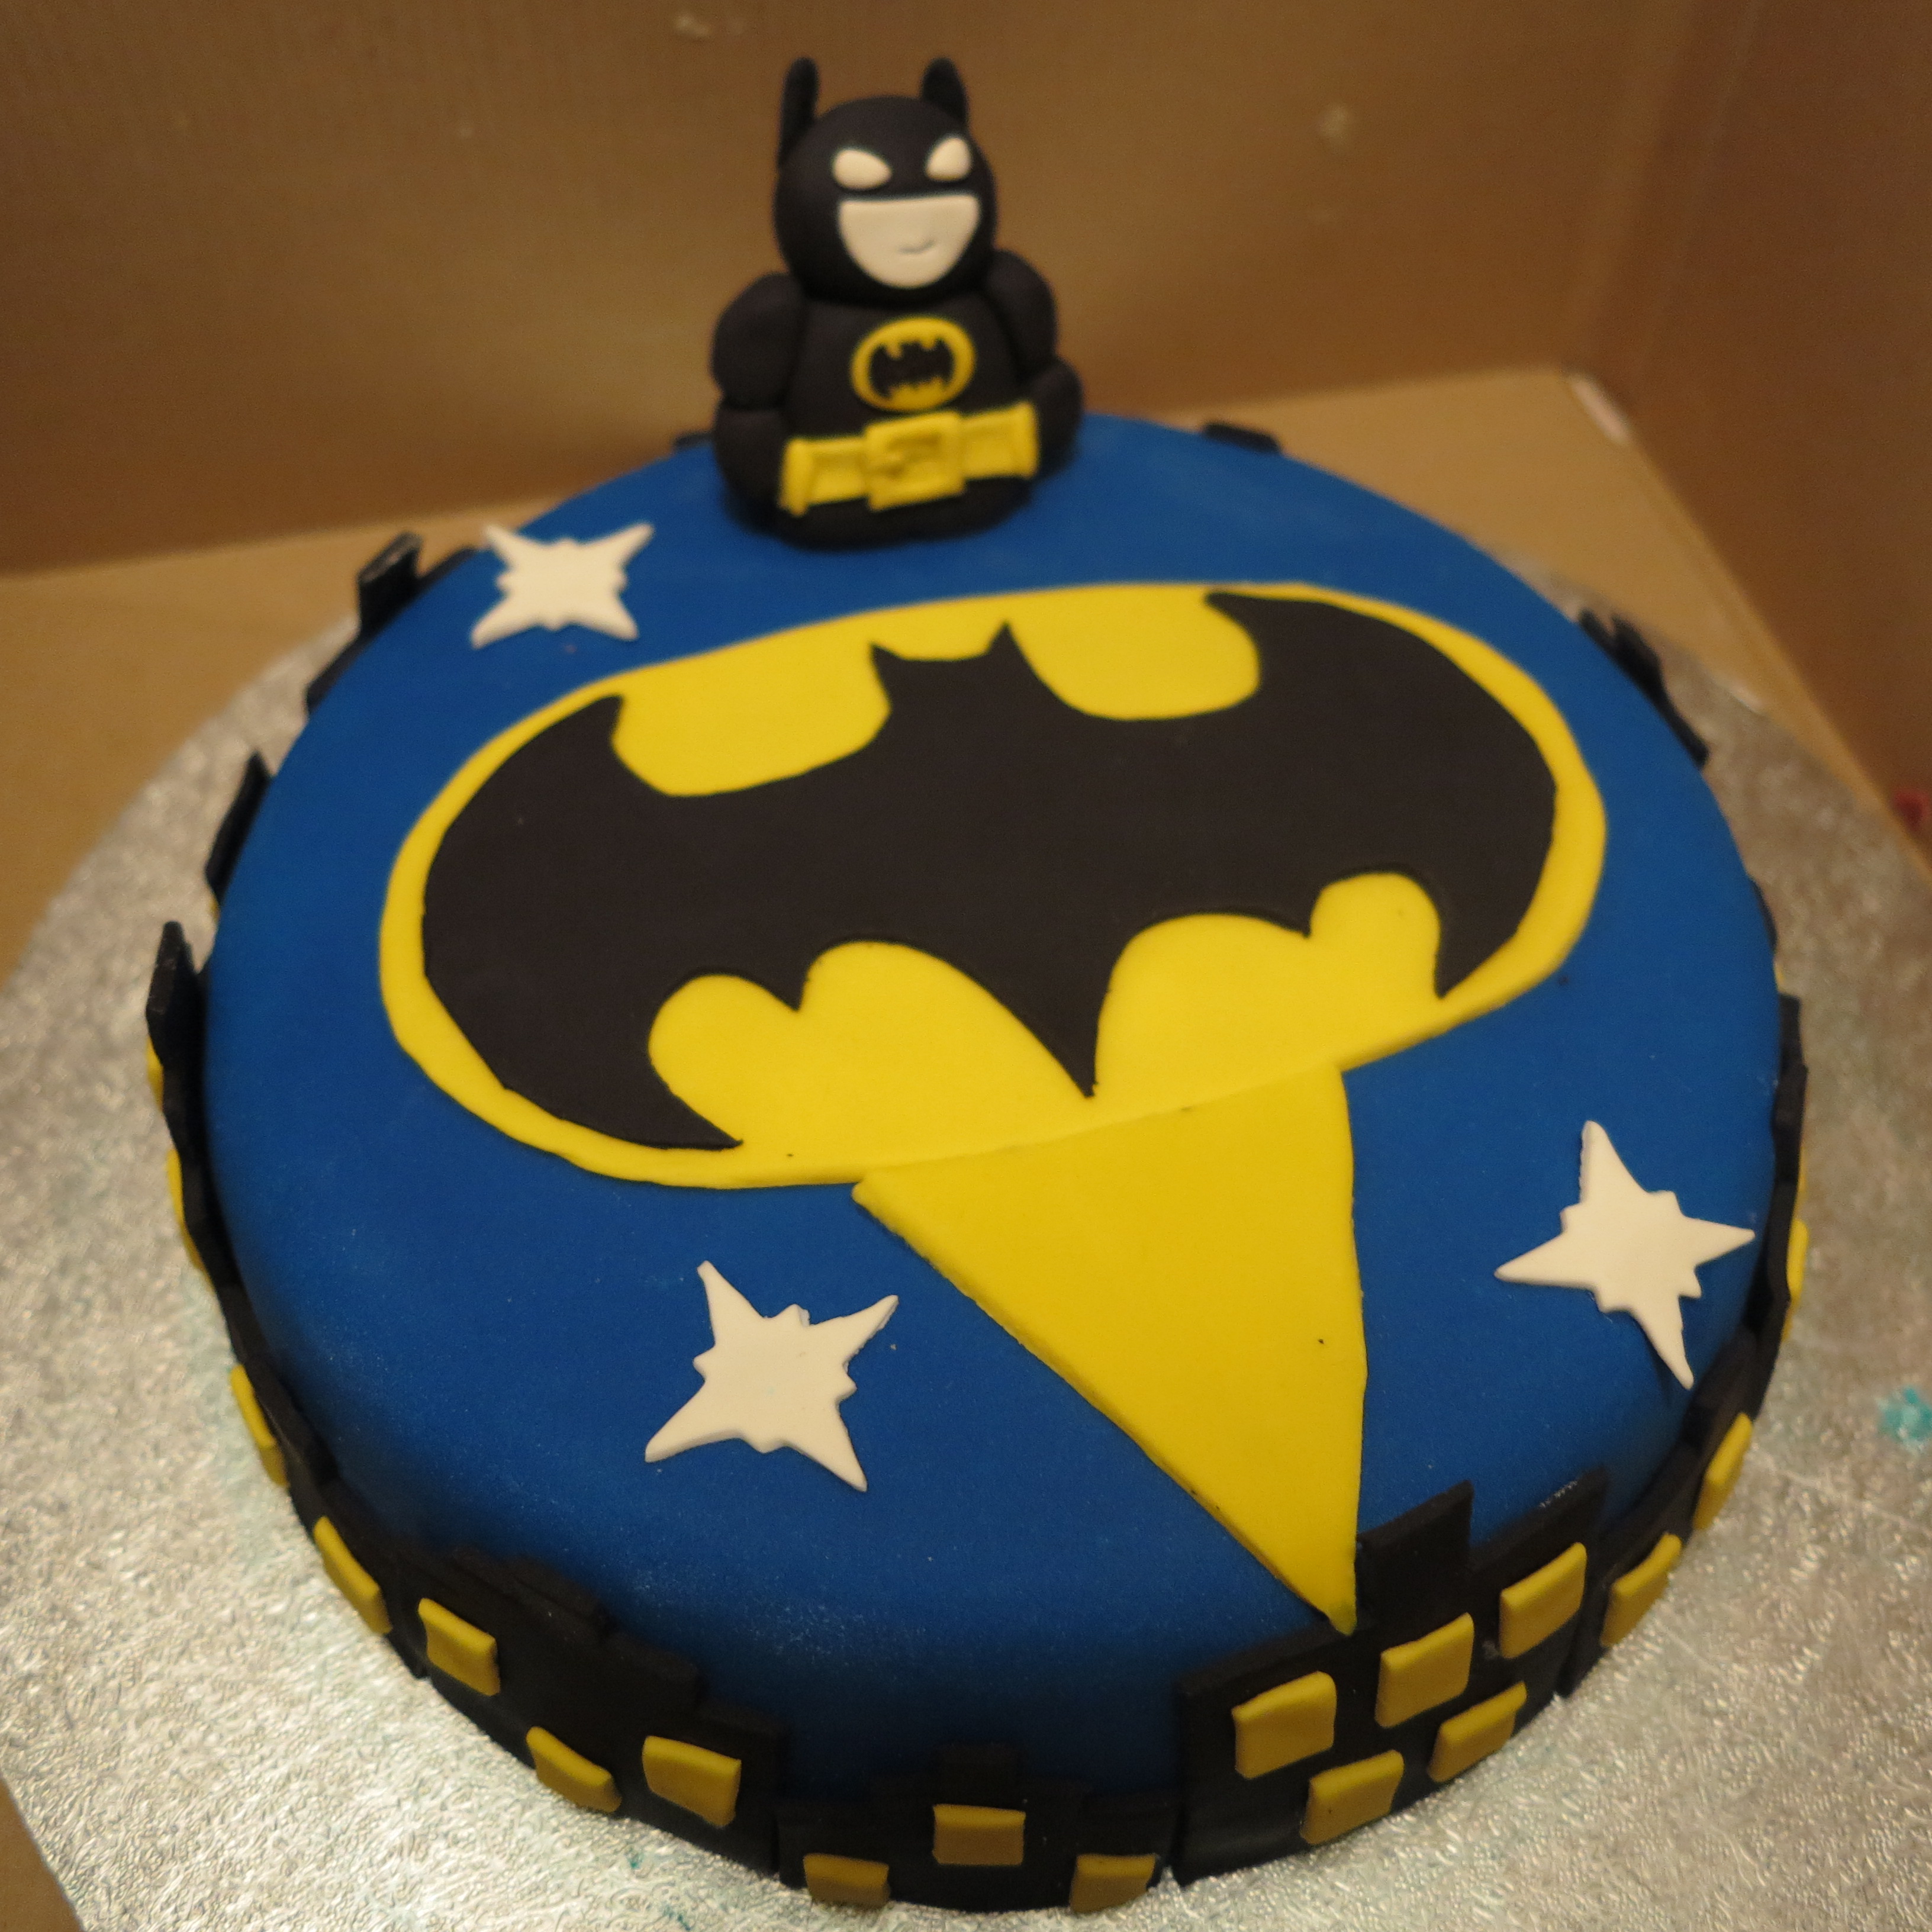  Batman  Cake The Baking Laboratory